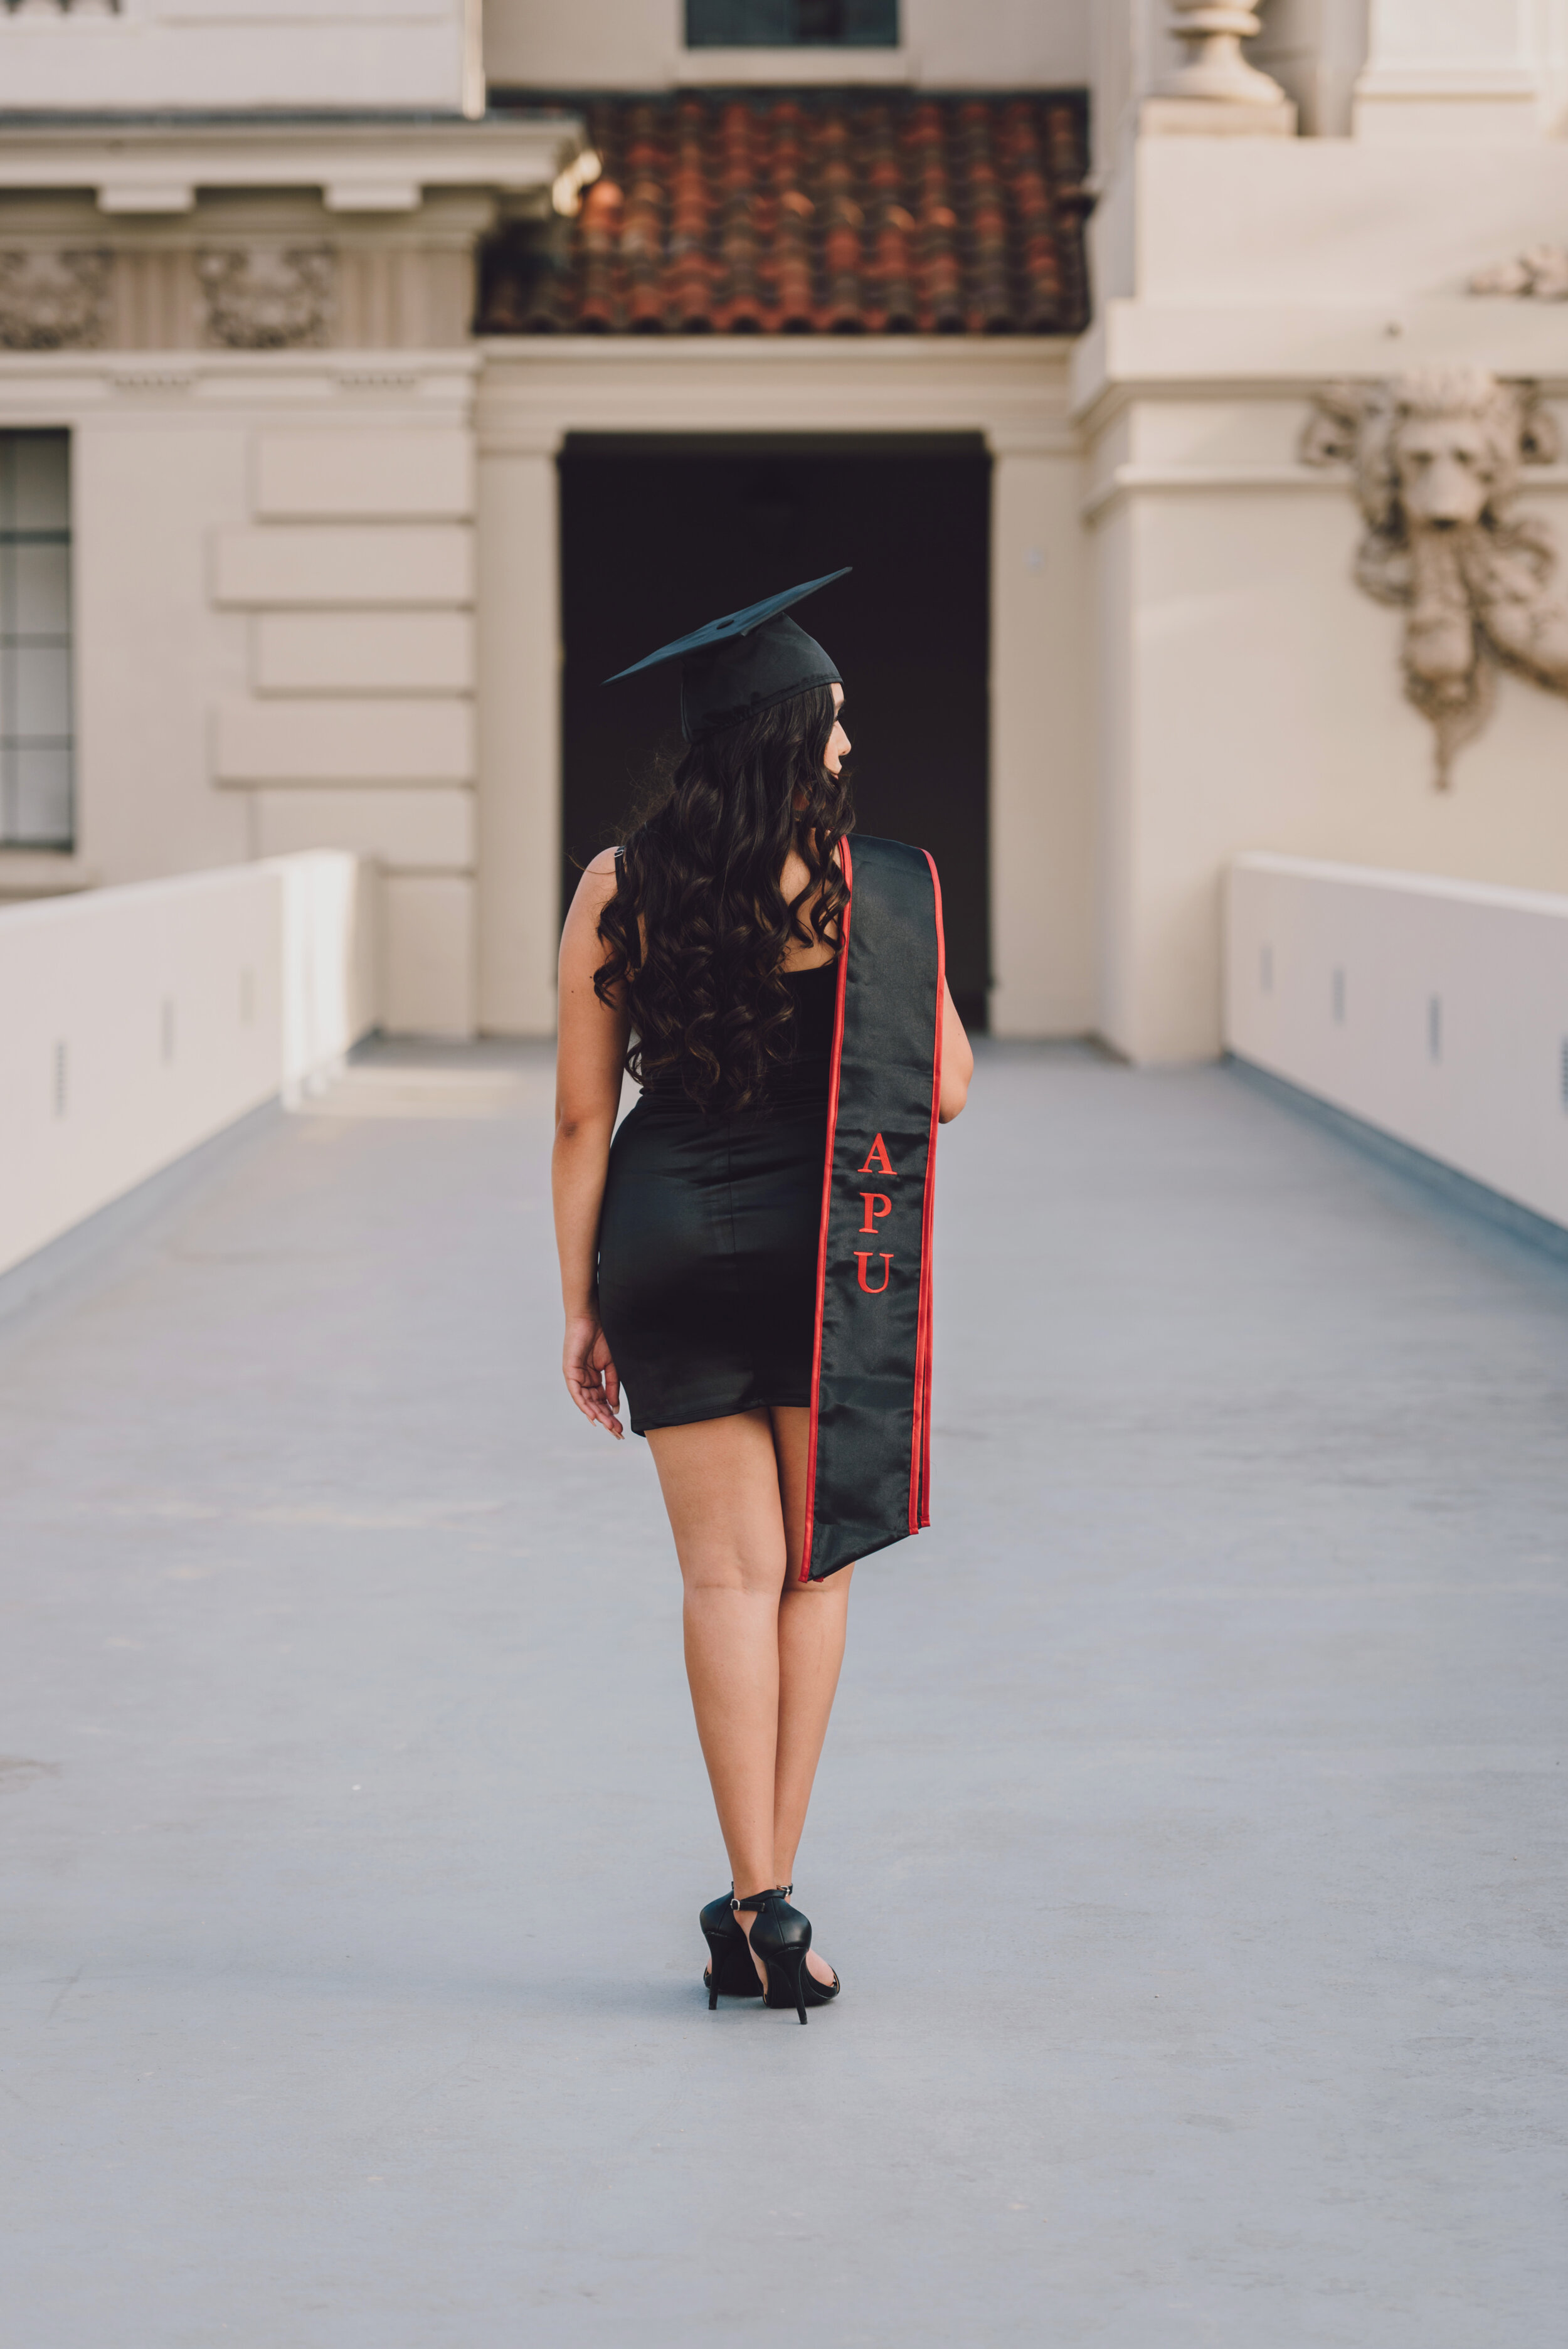 LosAngeles-Graduation-Portrait-Photographer-Pasadena-City-Hall-32.jpg